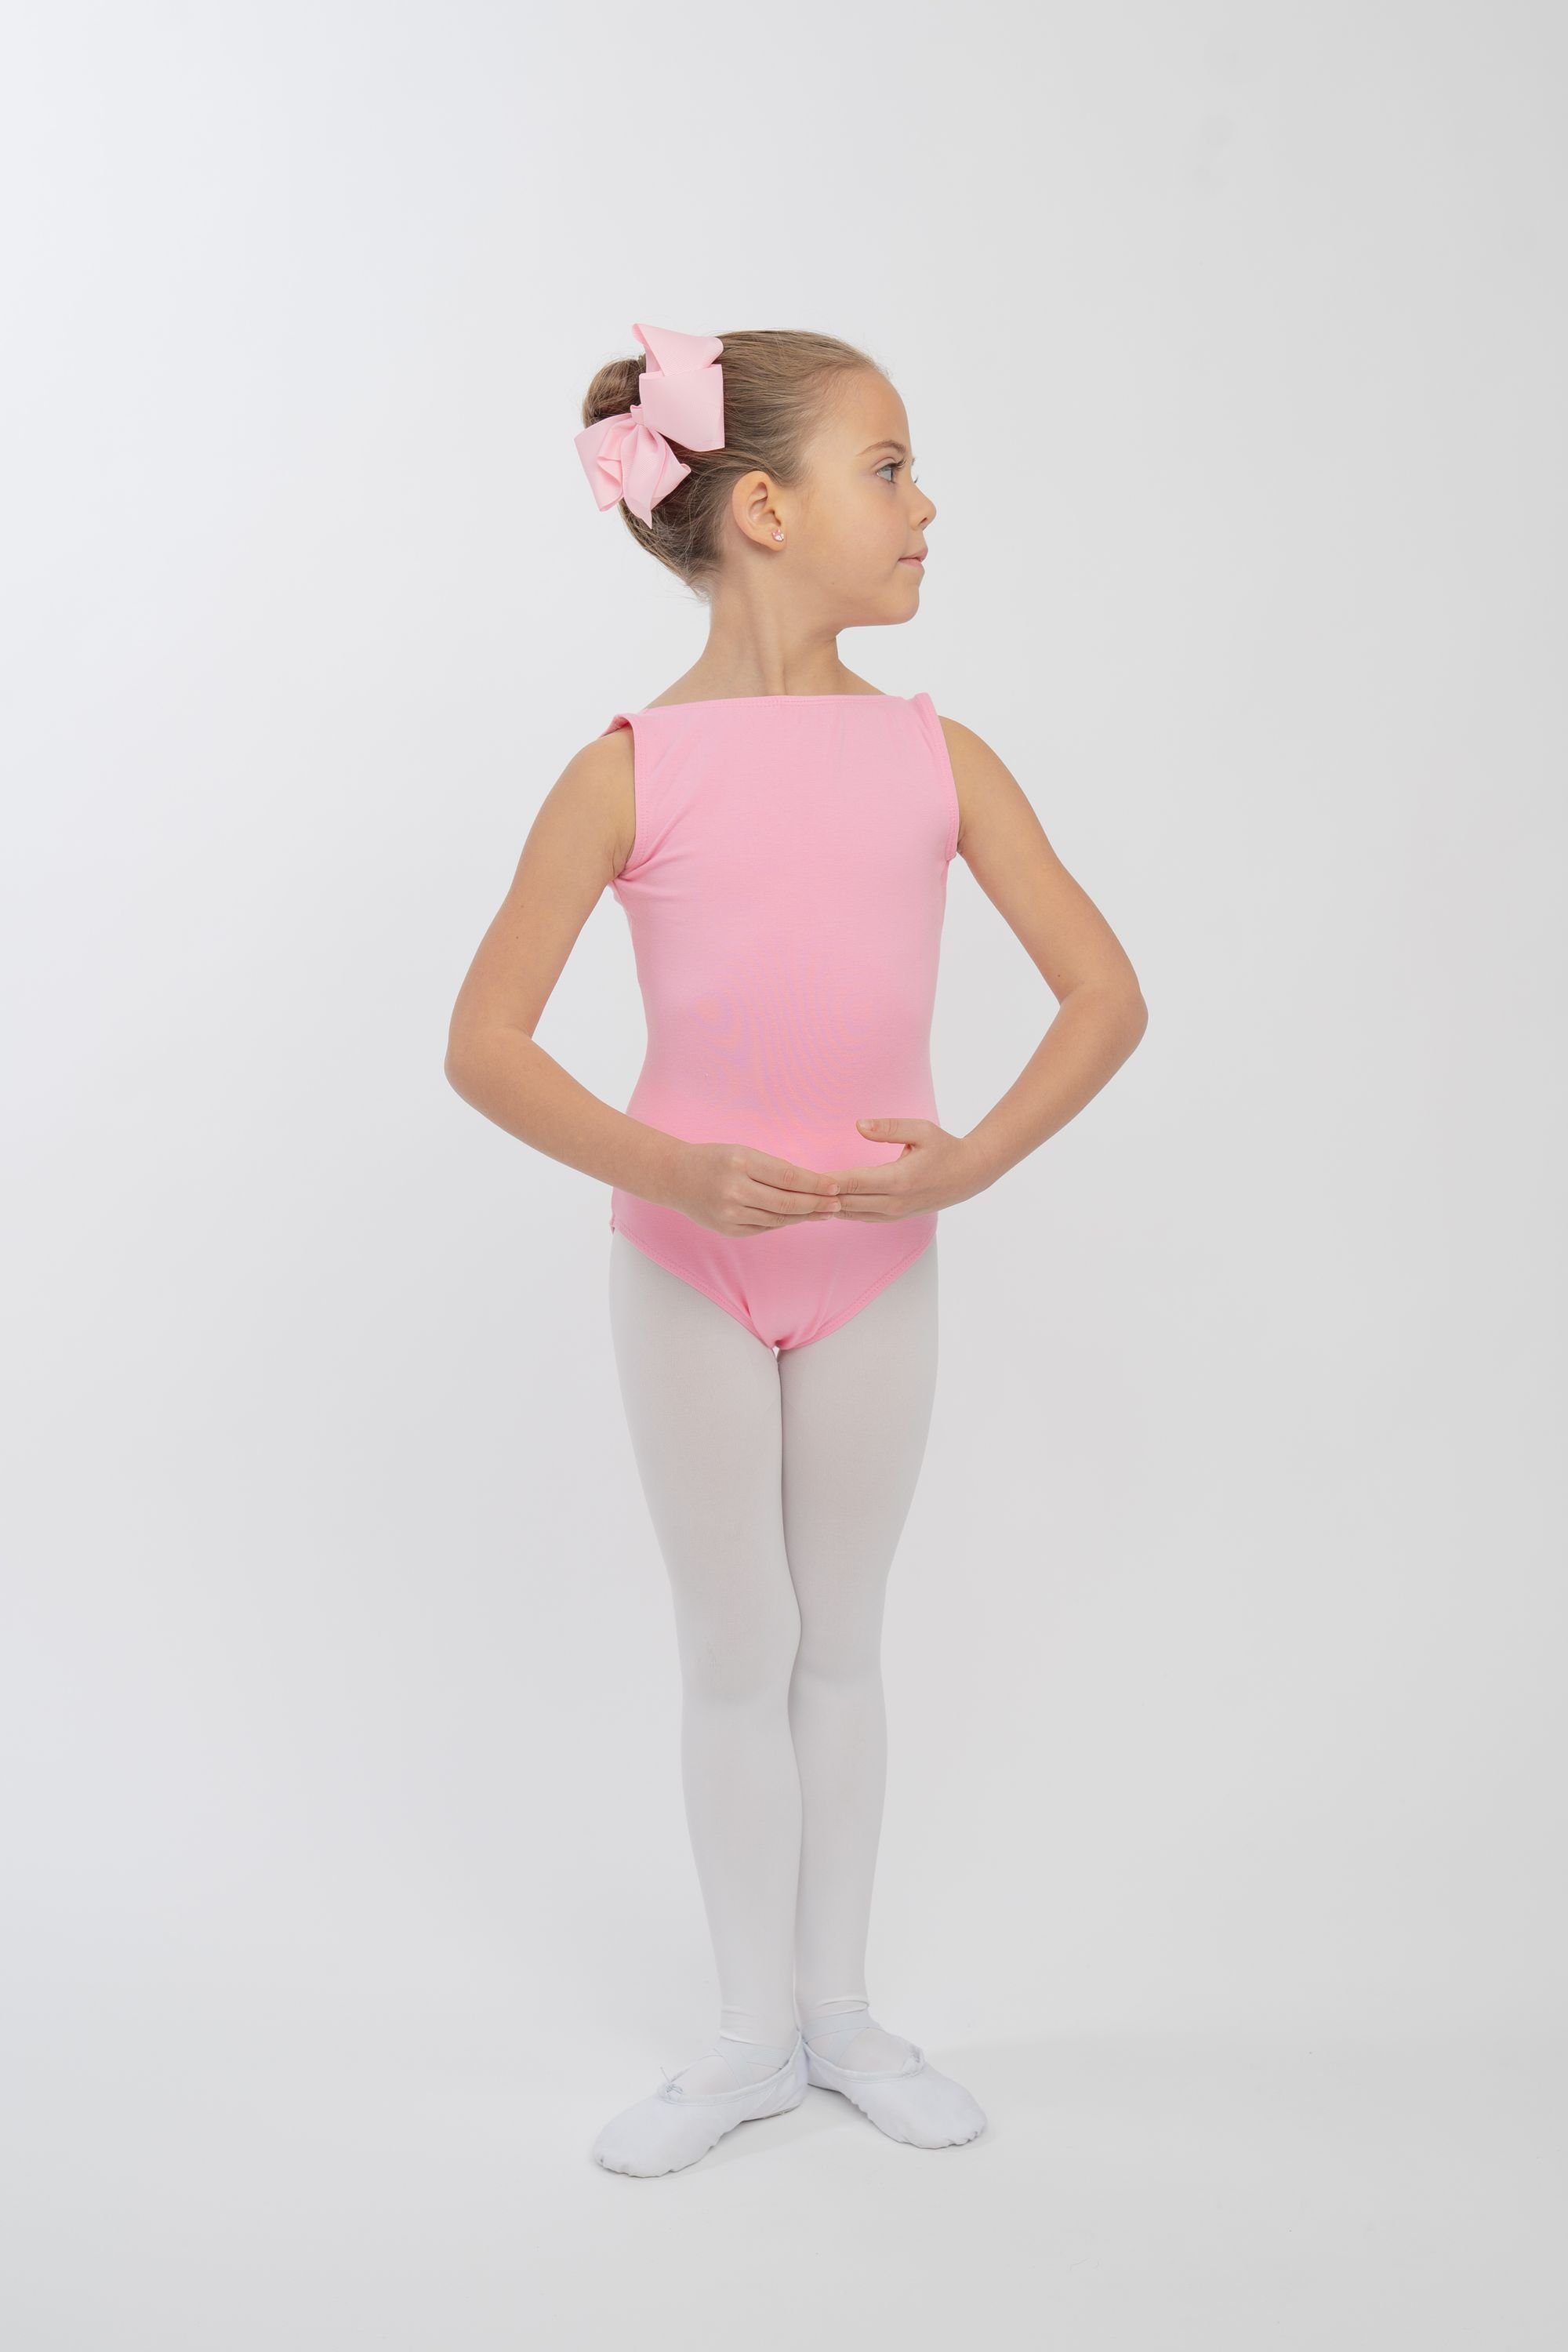 rosa Ballettbody ärmelloses Linda Kinder Body tiefem mit Trikot fürs Ballett Rückenausschnitt tanzmuster